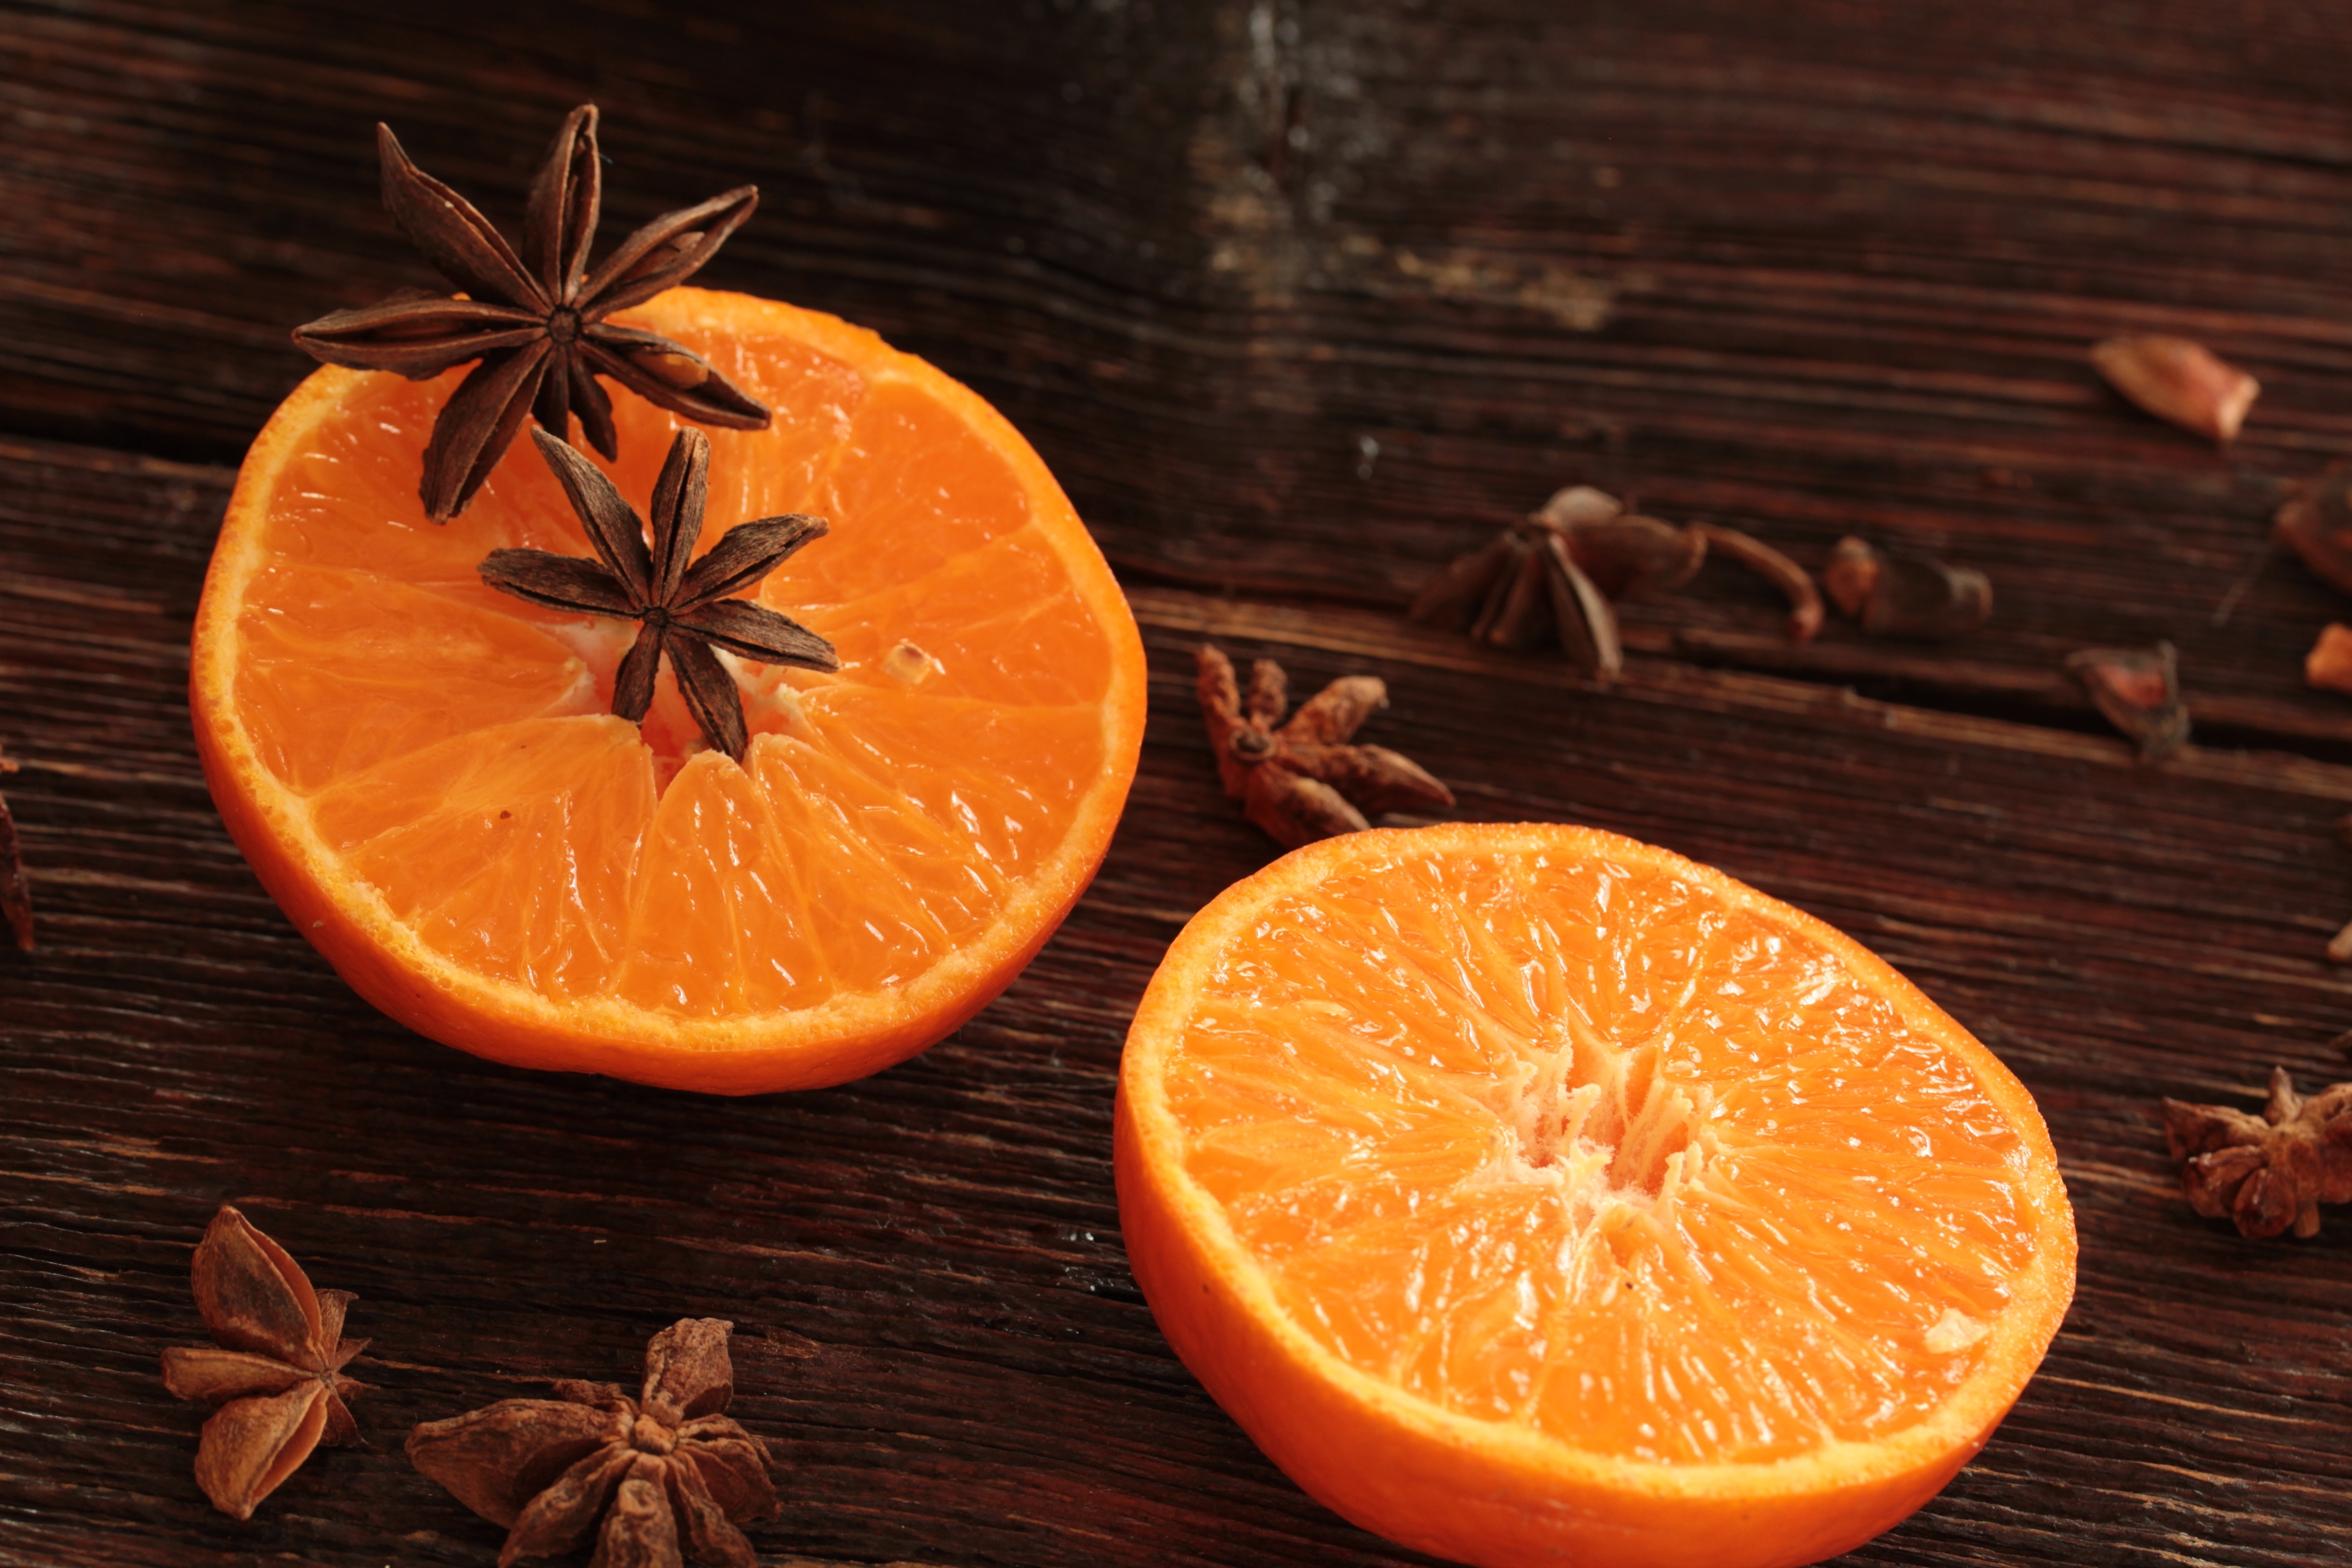 Wallpapers orange anise fruits on the desktop